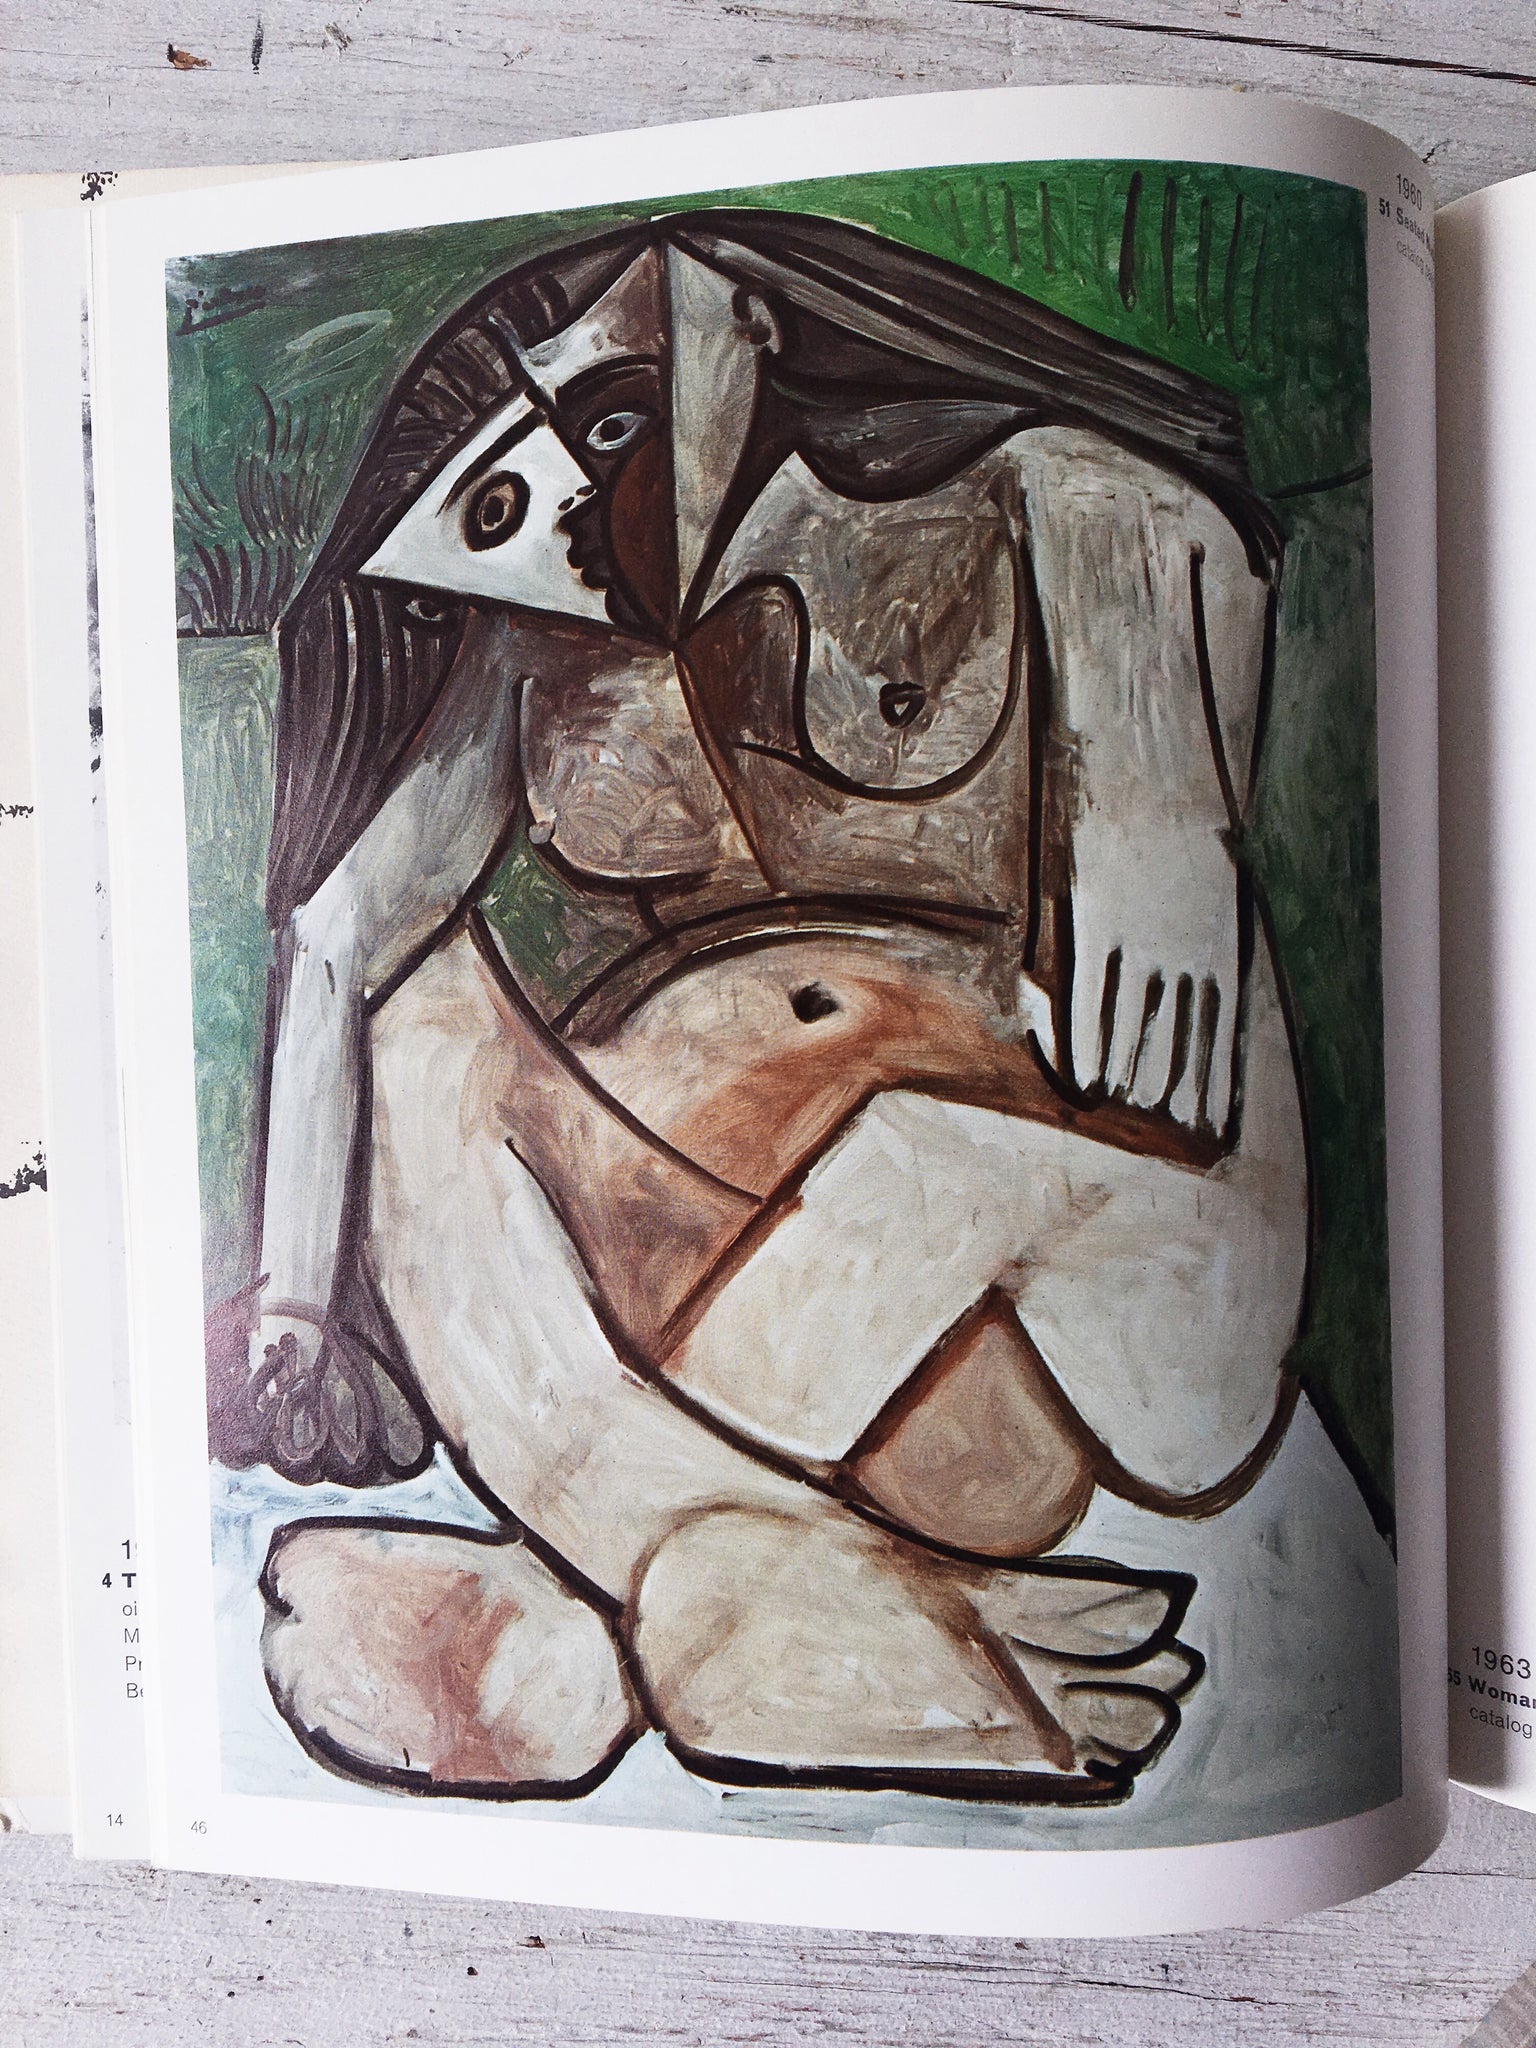 Vintage Picasso For Portland Book